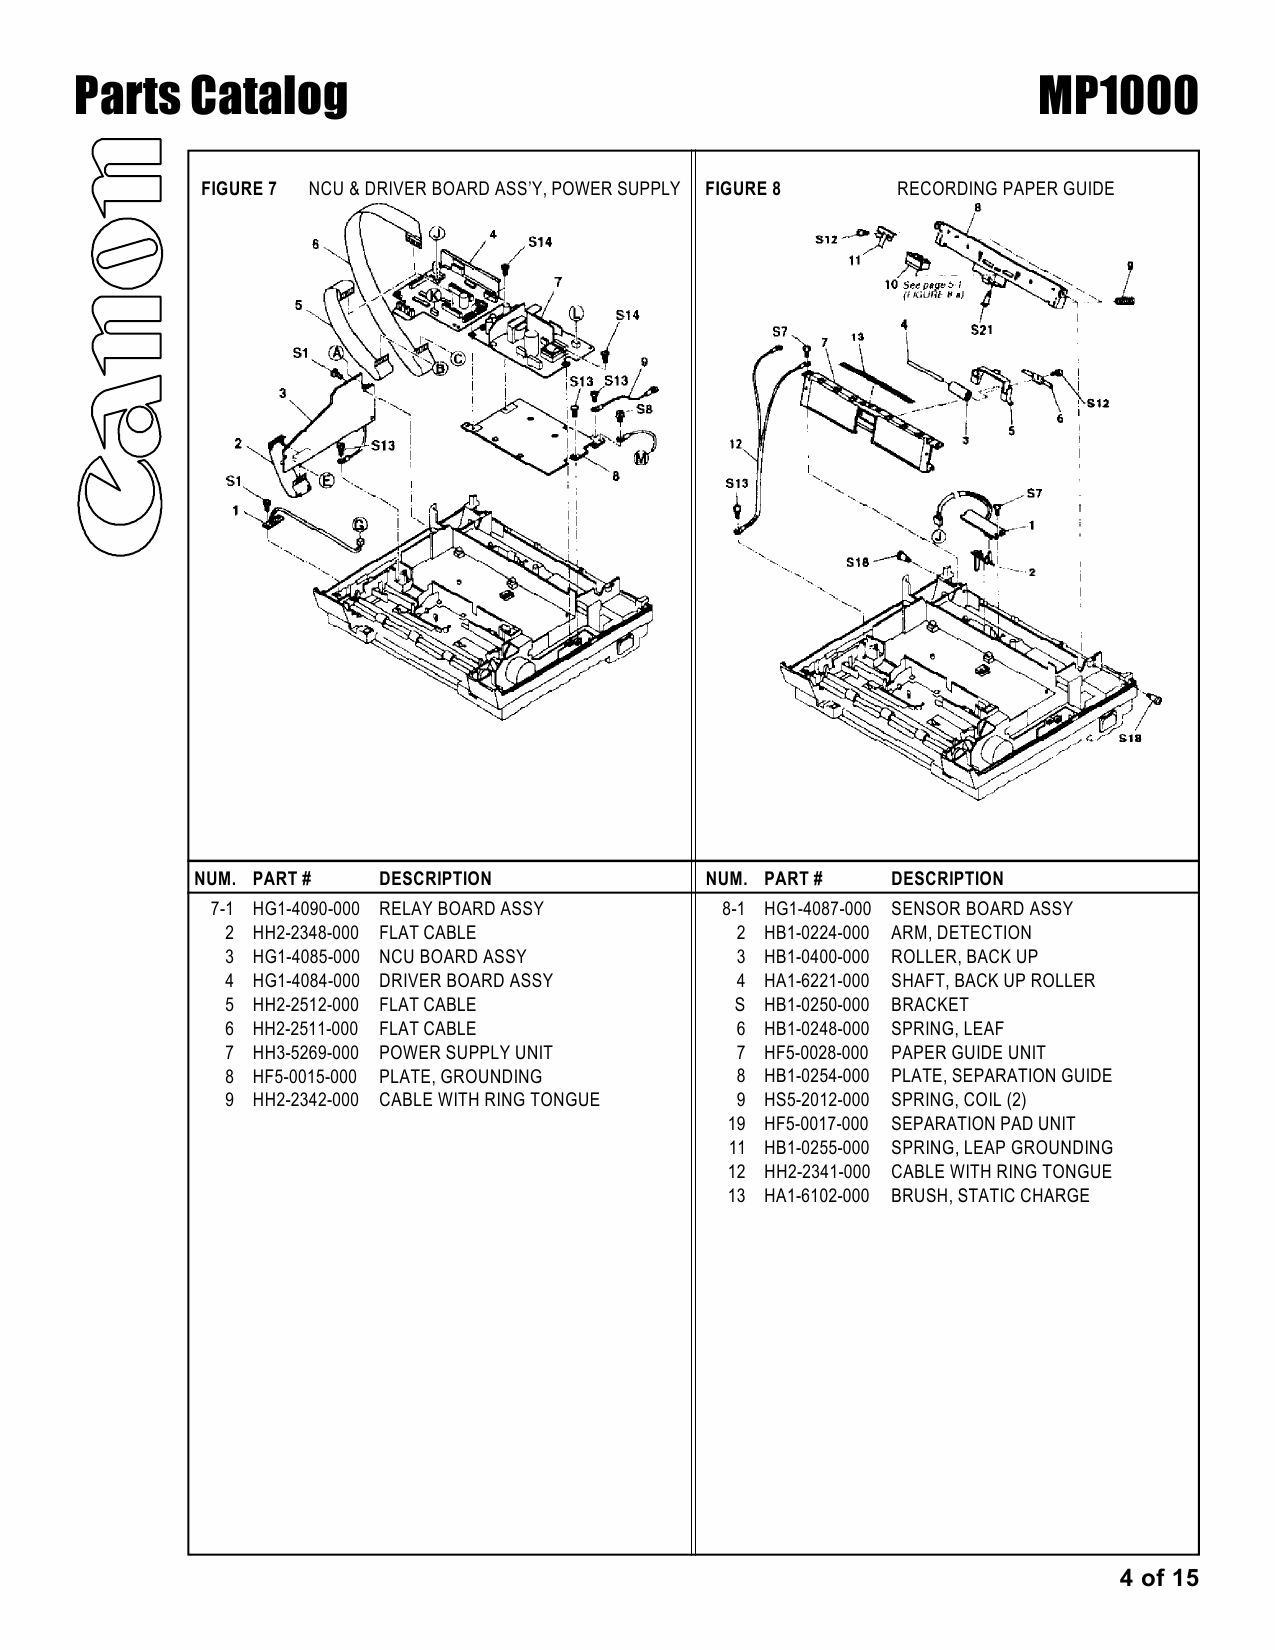 Canon MultiPASS MP-1000 Parts Catalog Manual-4